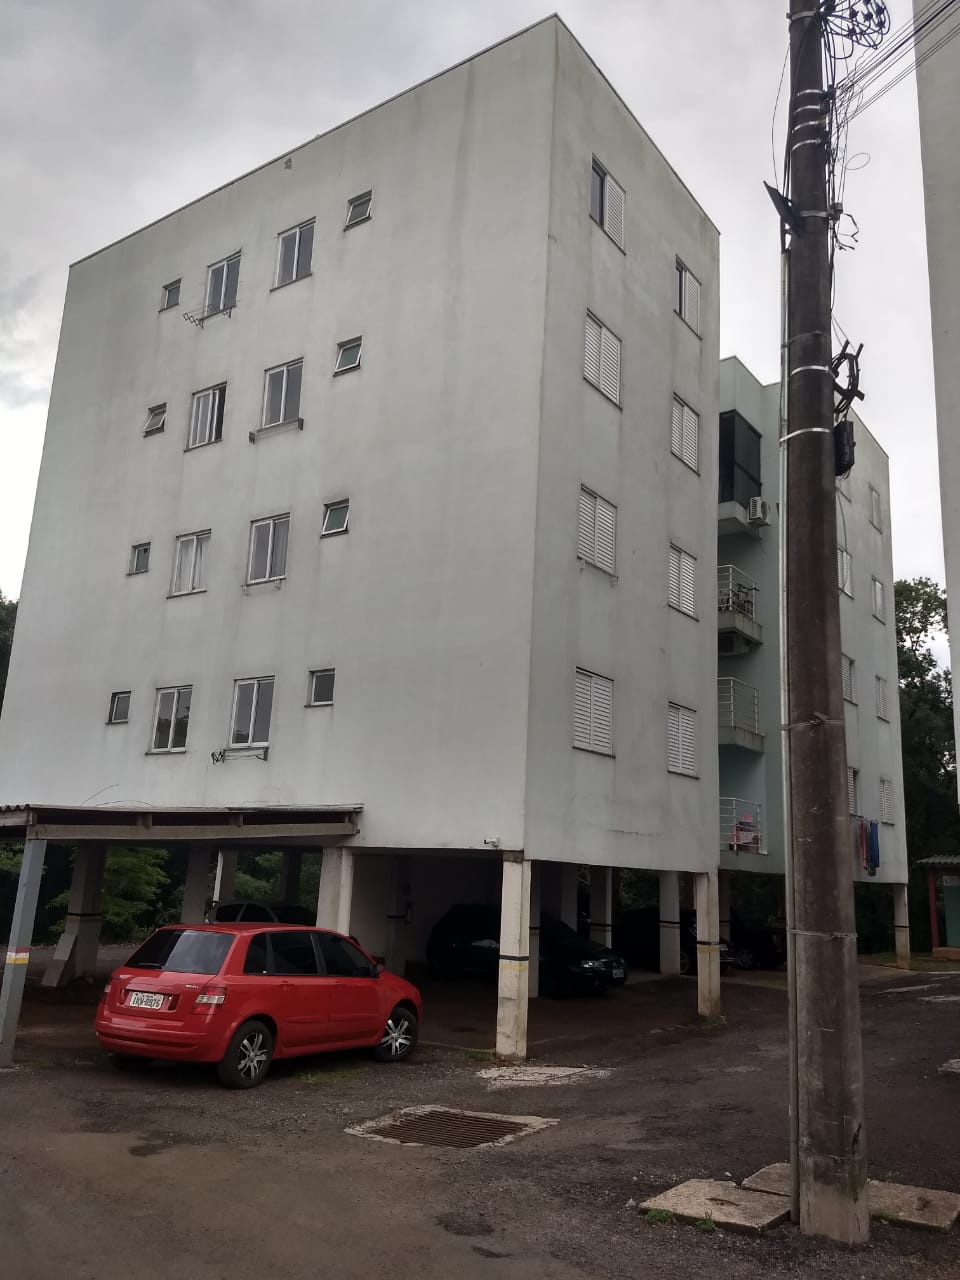 Neetzow Imobiliária